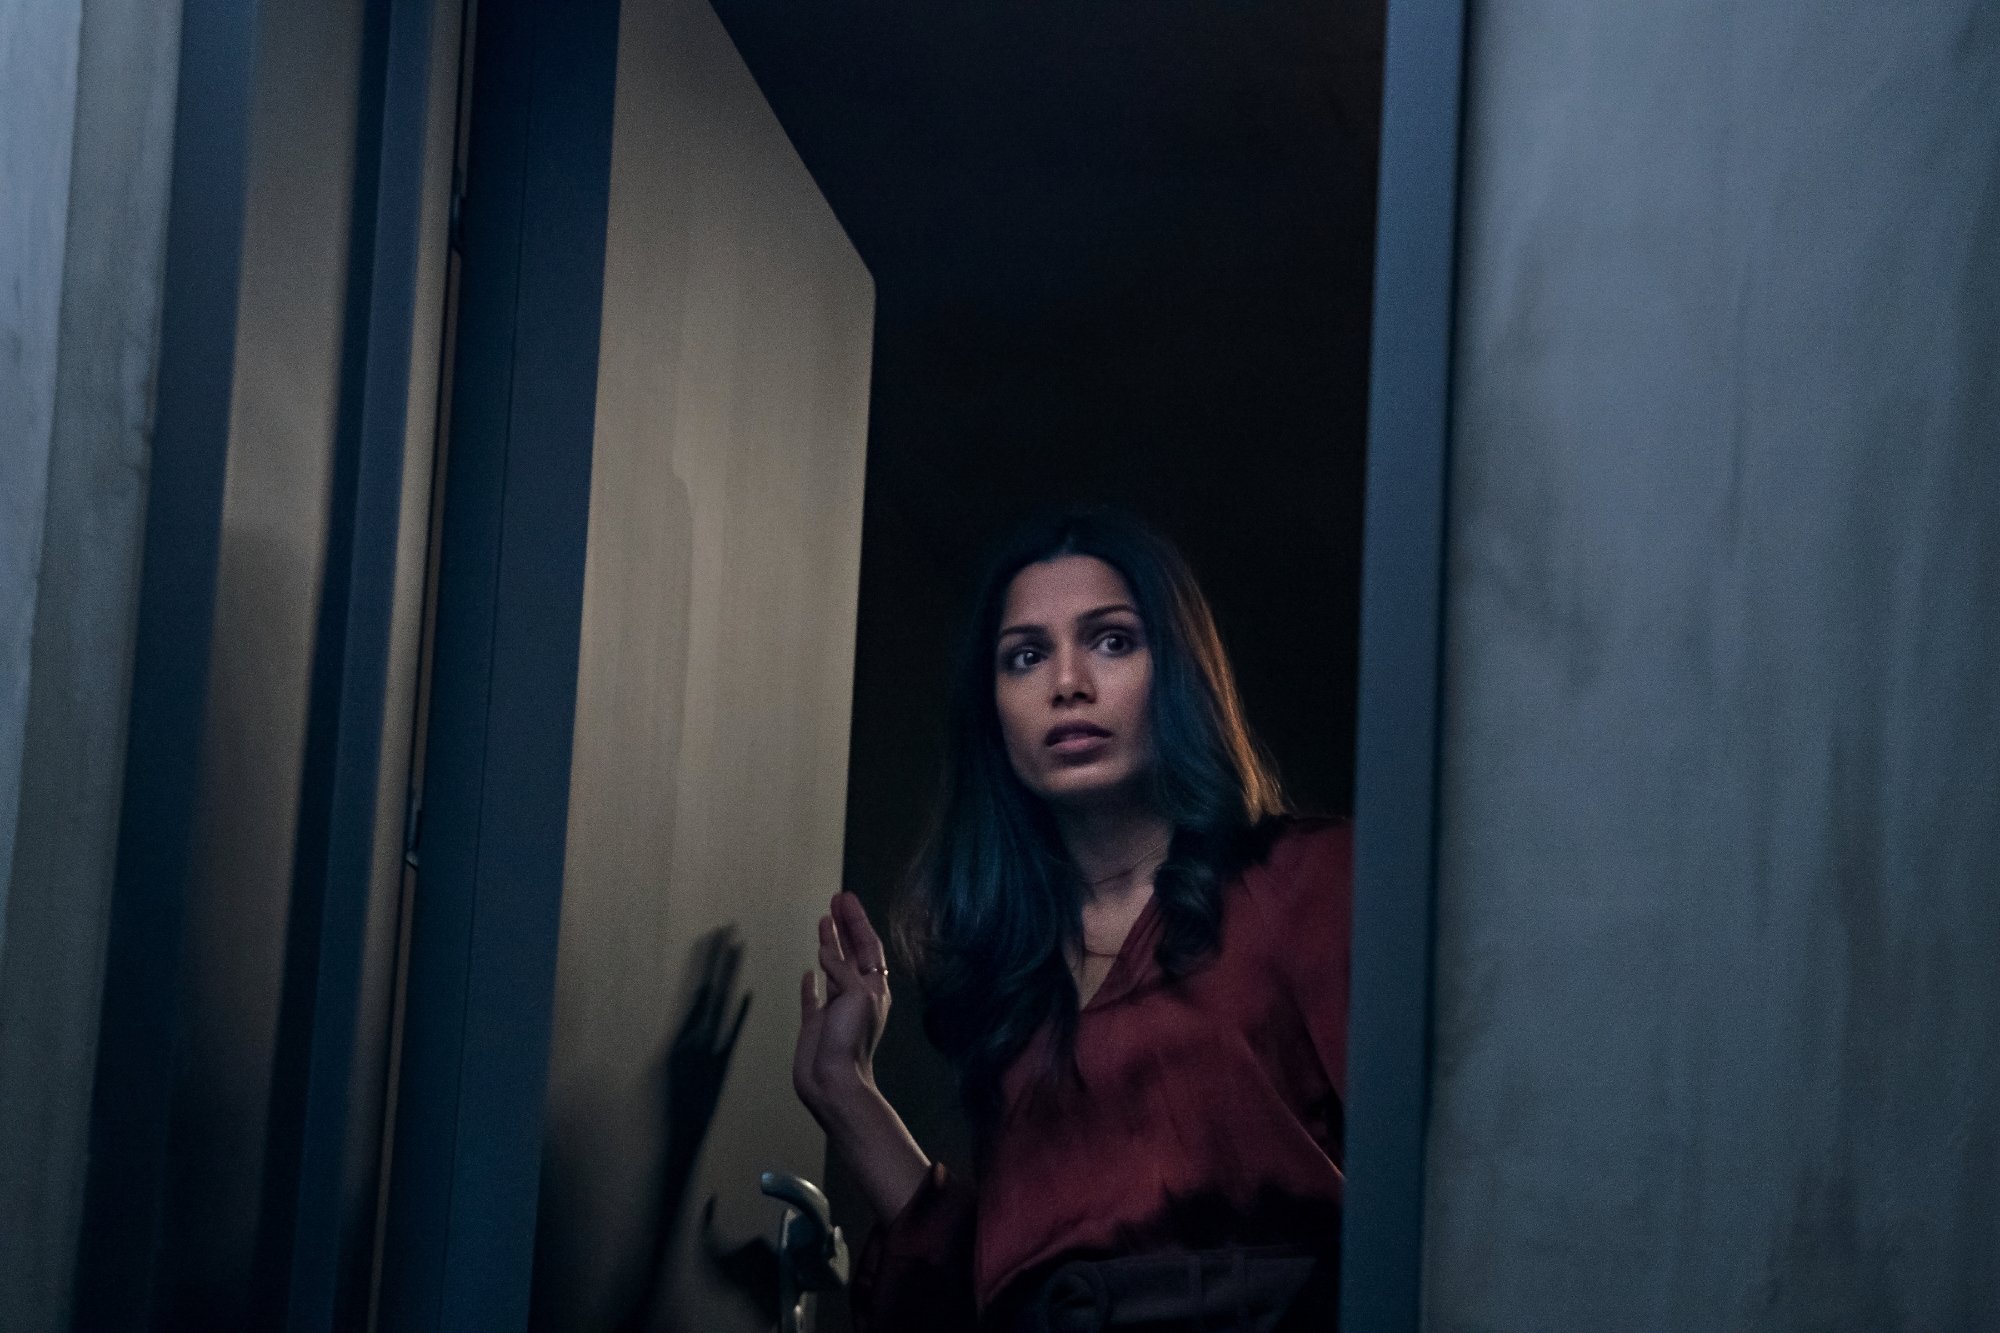 'Intrusion' star Freida Pinto as Meera in the Netflix movie creeping around wearing red